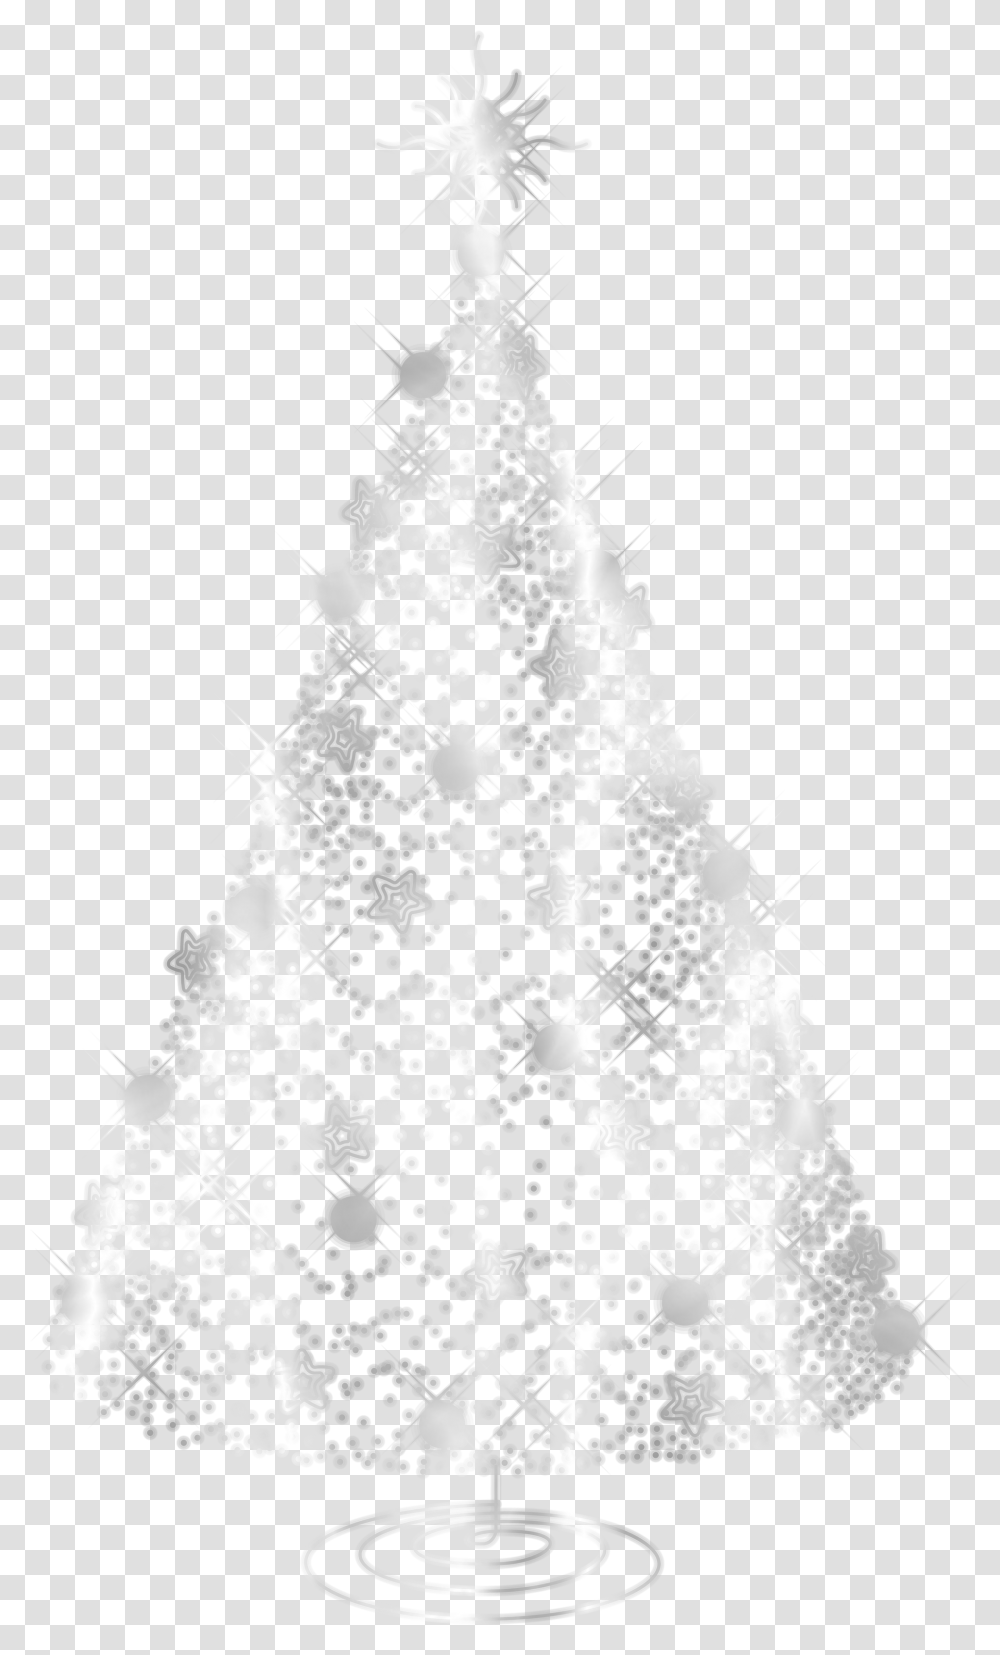 Black And White Christmas Ornament Clip Art Black And Glittering Images Of Christmas, Christmas Tree, Plant, Star Symbol Transparent Png